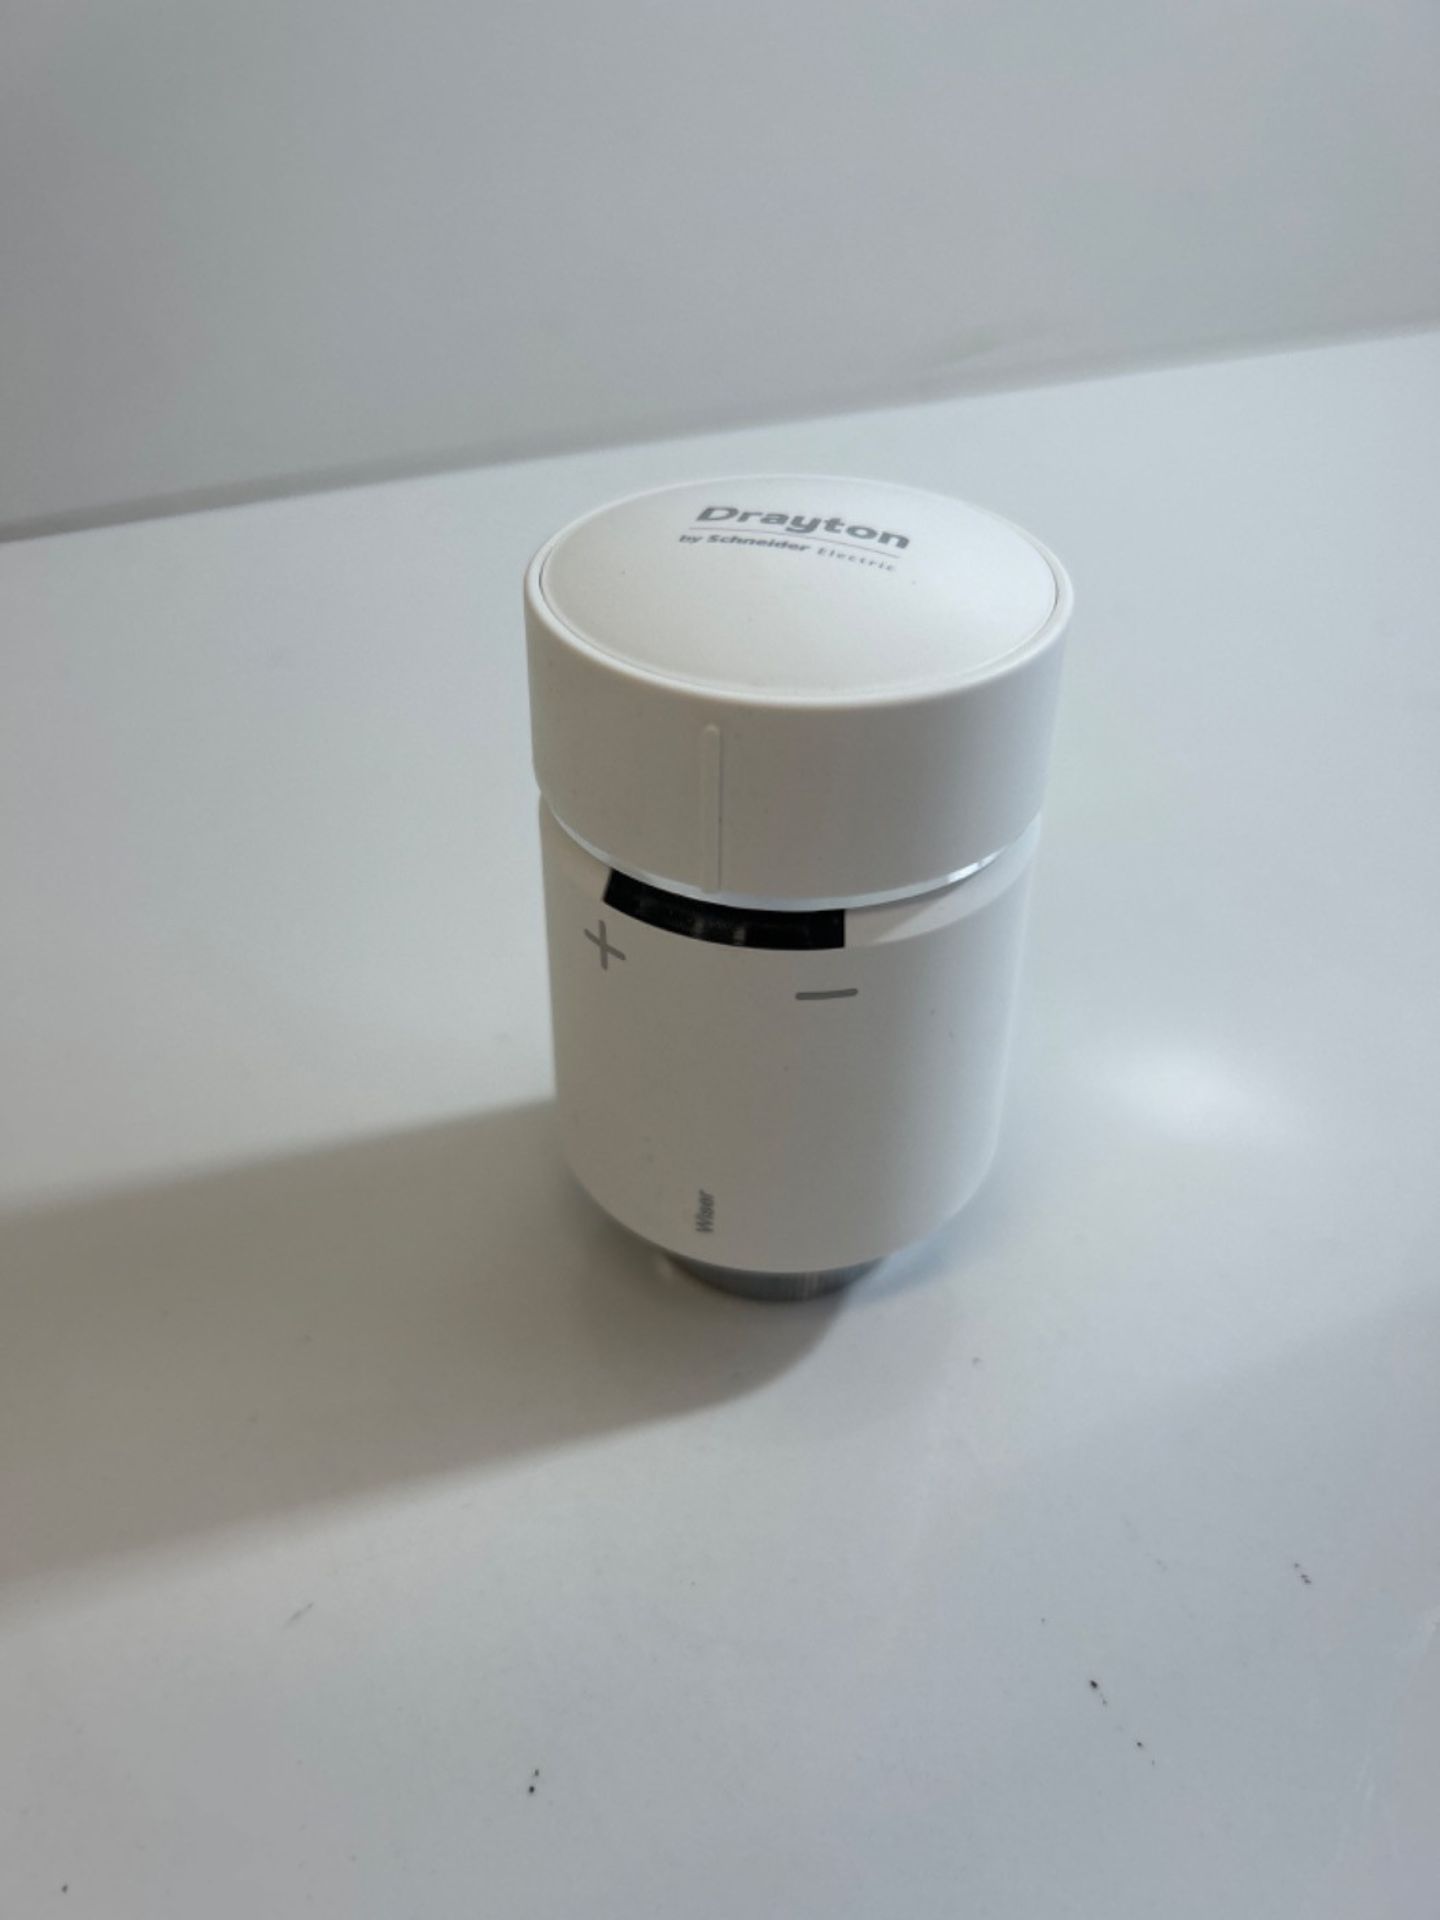 Drayton Wiser Smart Heating Radiator Thermostat Works with Amazon Alexa, Google Home, IFTTT - Image 2 of 3